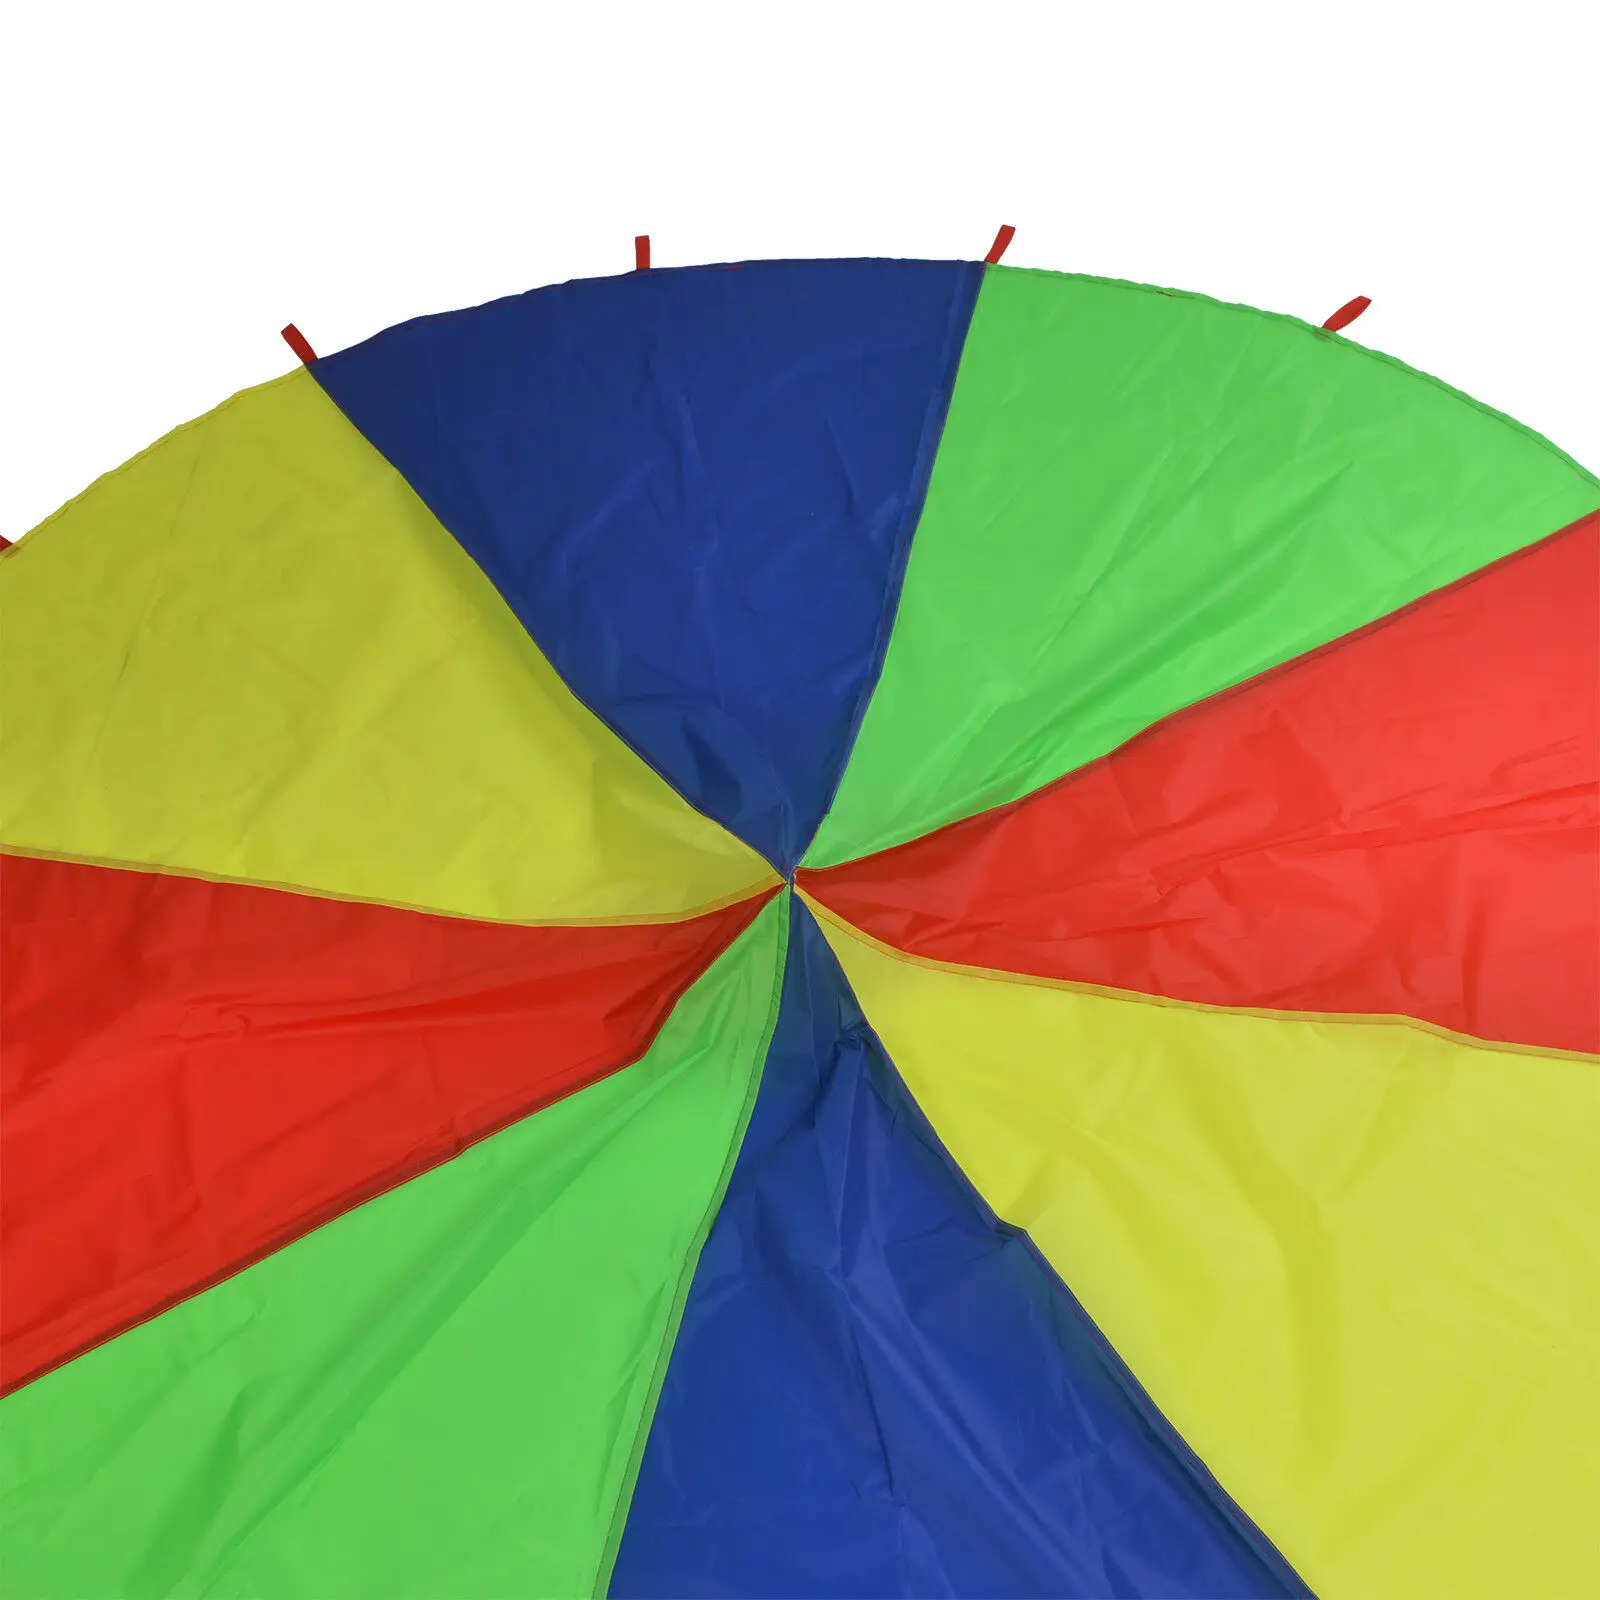 

Diameter Outdoor Rainbow Umbrella Parachute Toy Jump-Sack Ballute Play Teamwork Game Toy For Kids Gift Teaching Aids 2M/3M